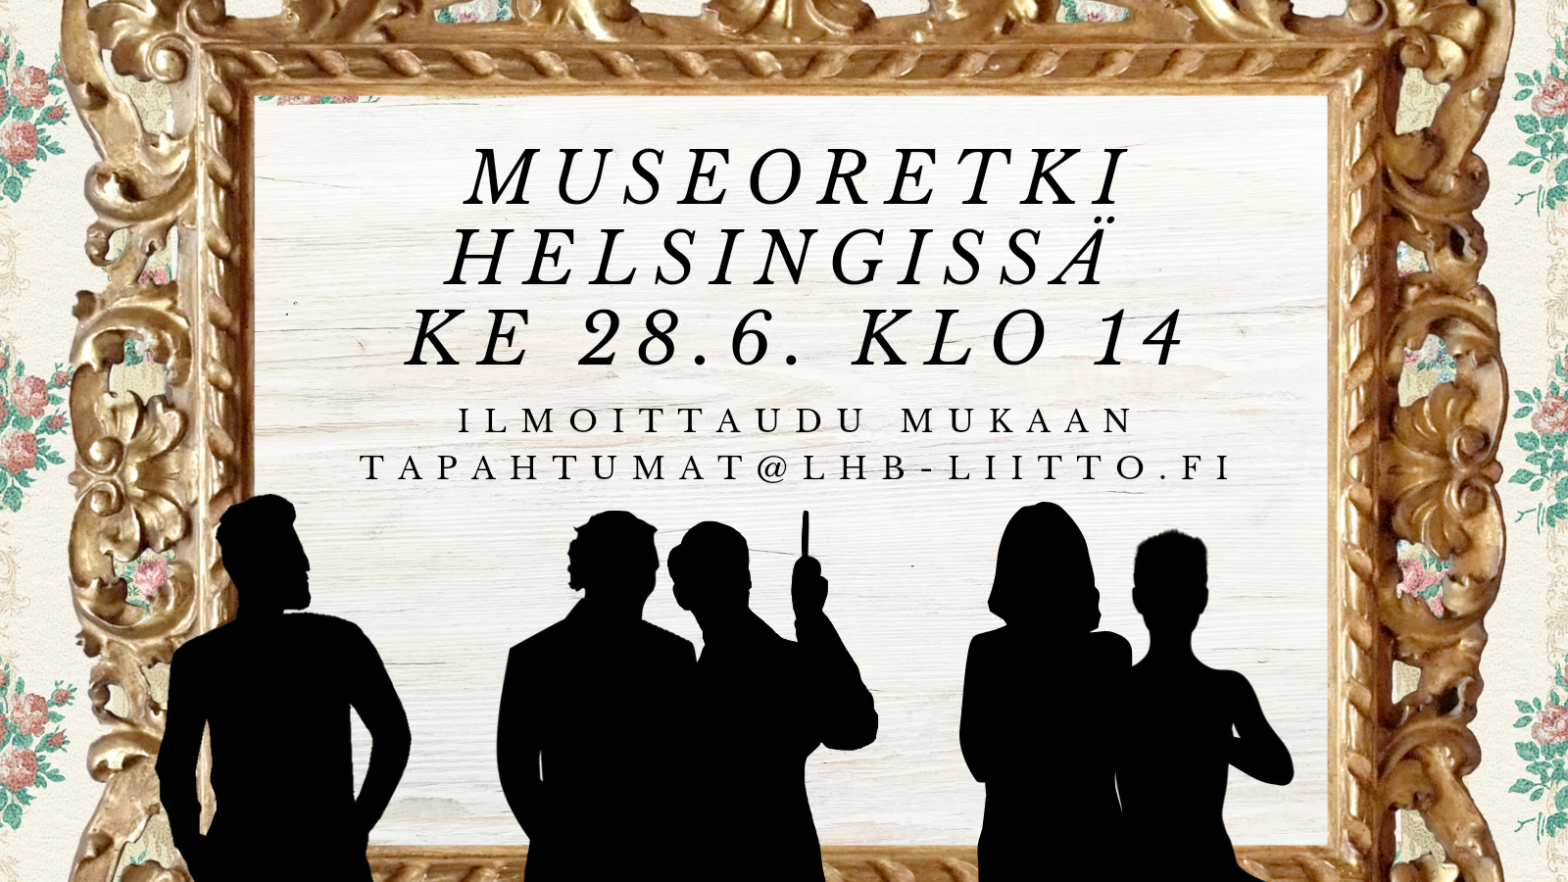 Museoretki Helsingissä ke 28.6. klo 14 alkaen